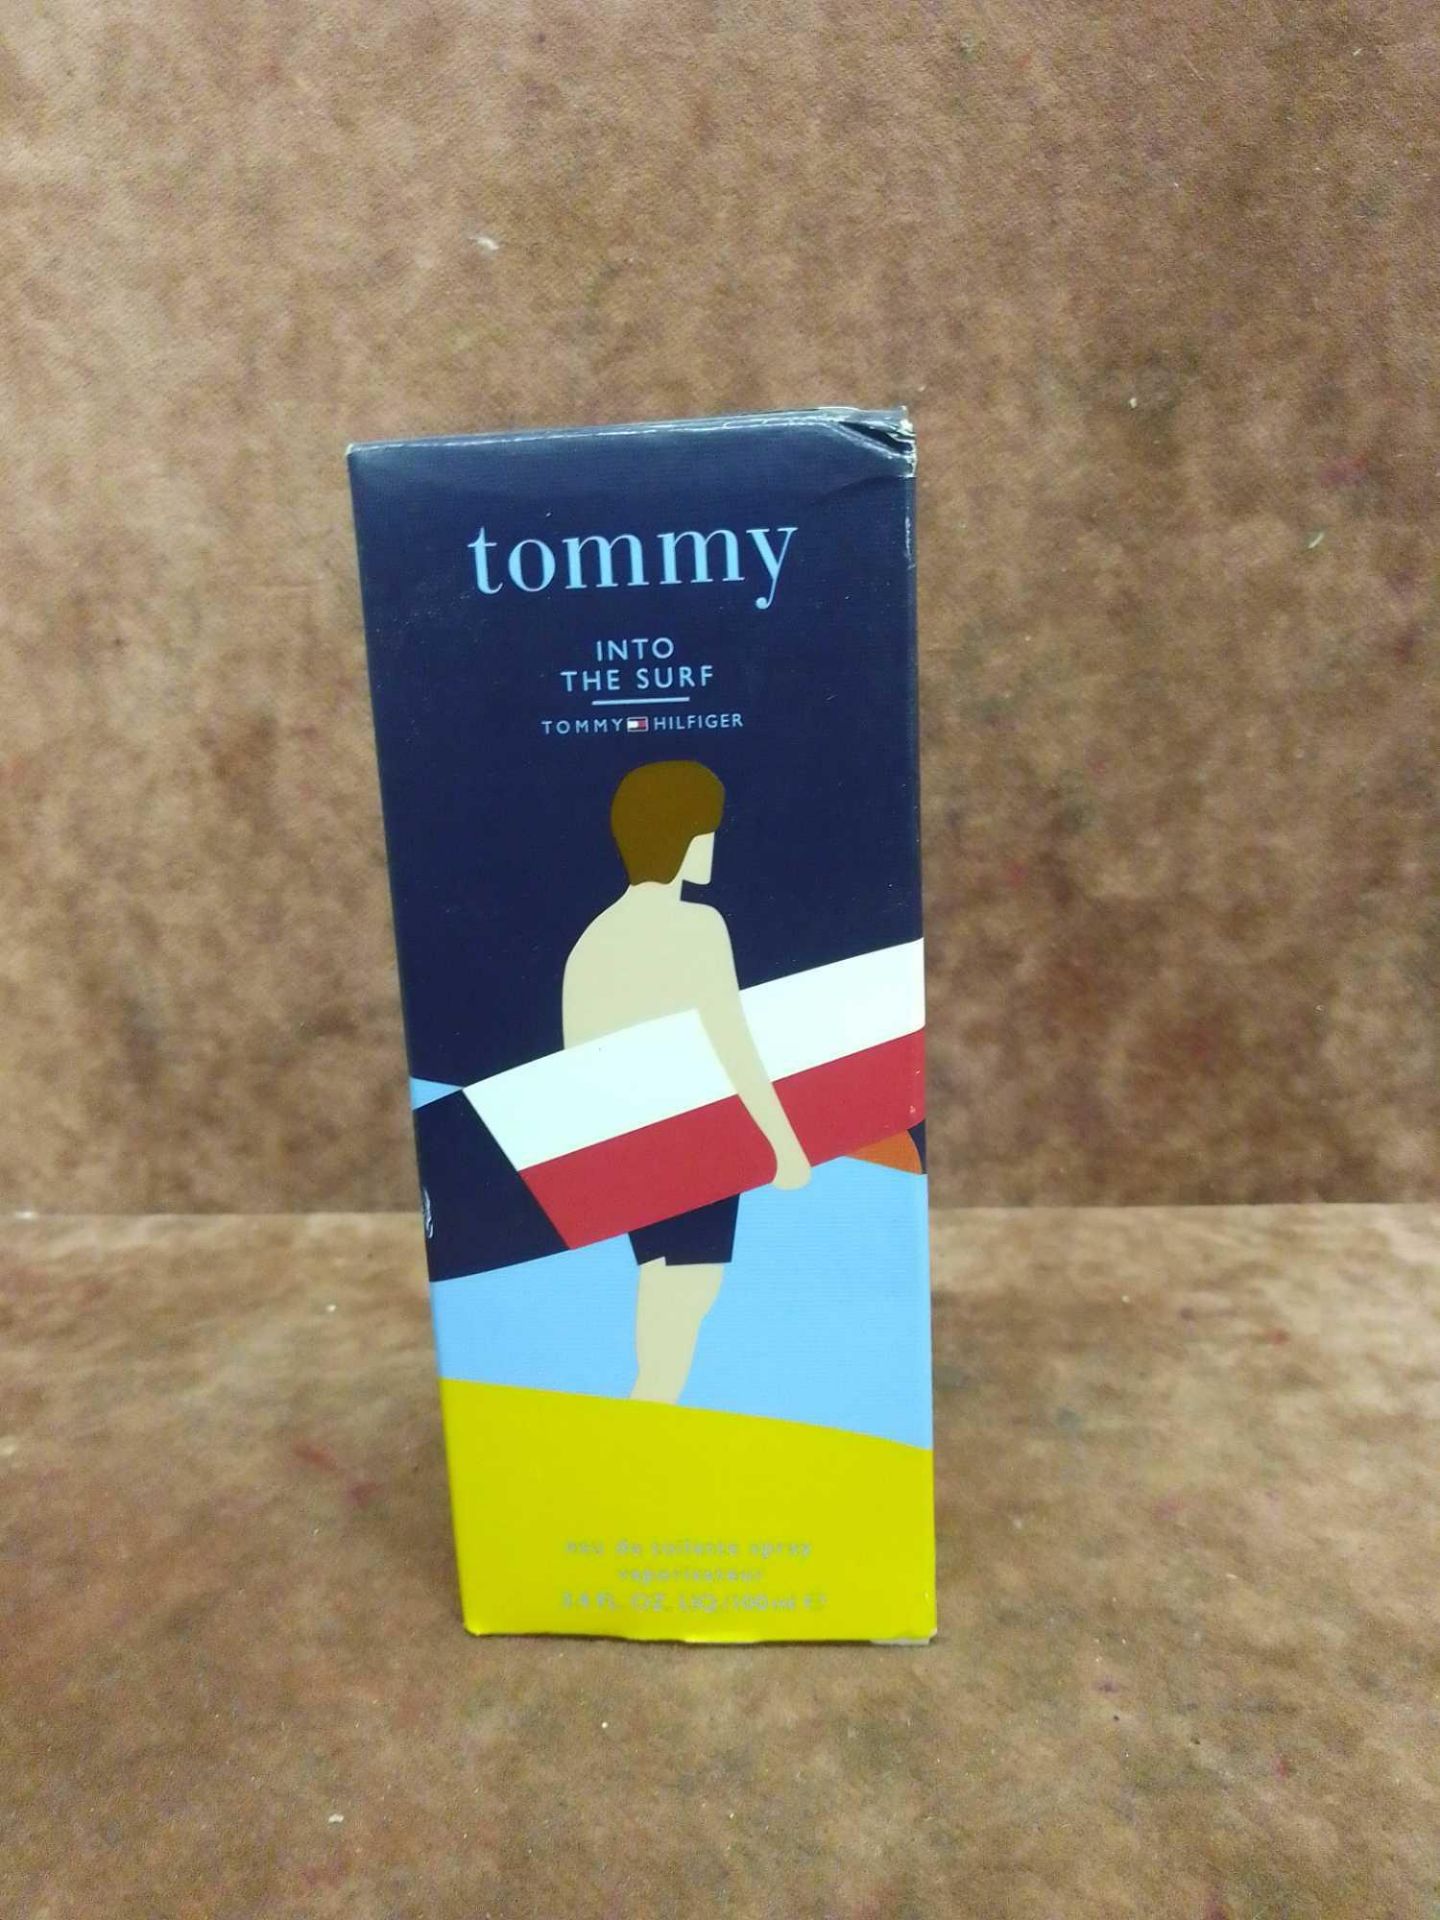 (Jb) RRP £50 Unboxed 100Ml Tester Bottle Of Tommy Hilfiger Tommy Into The Surf Eau De Toilette Spray